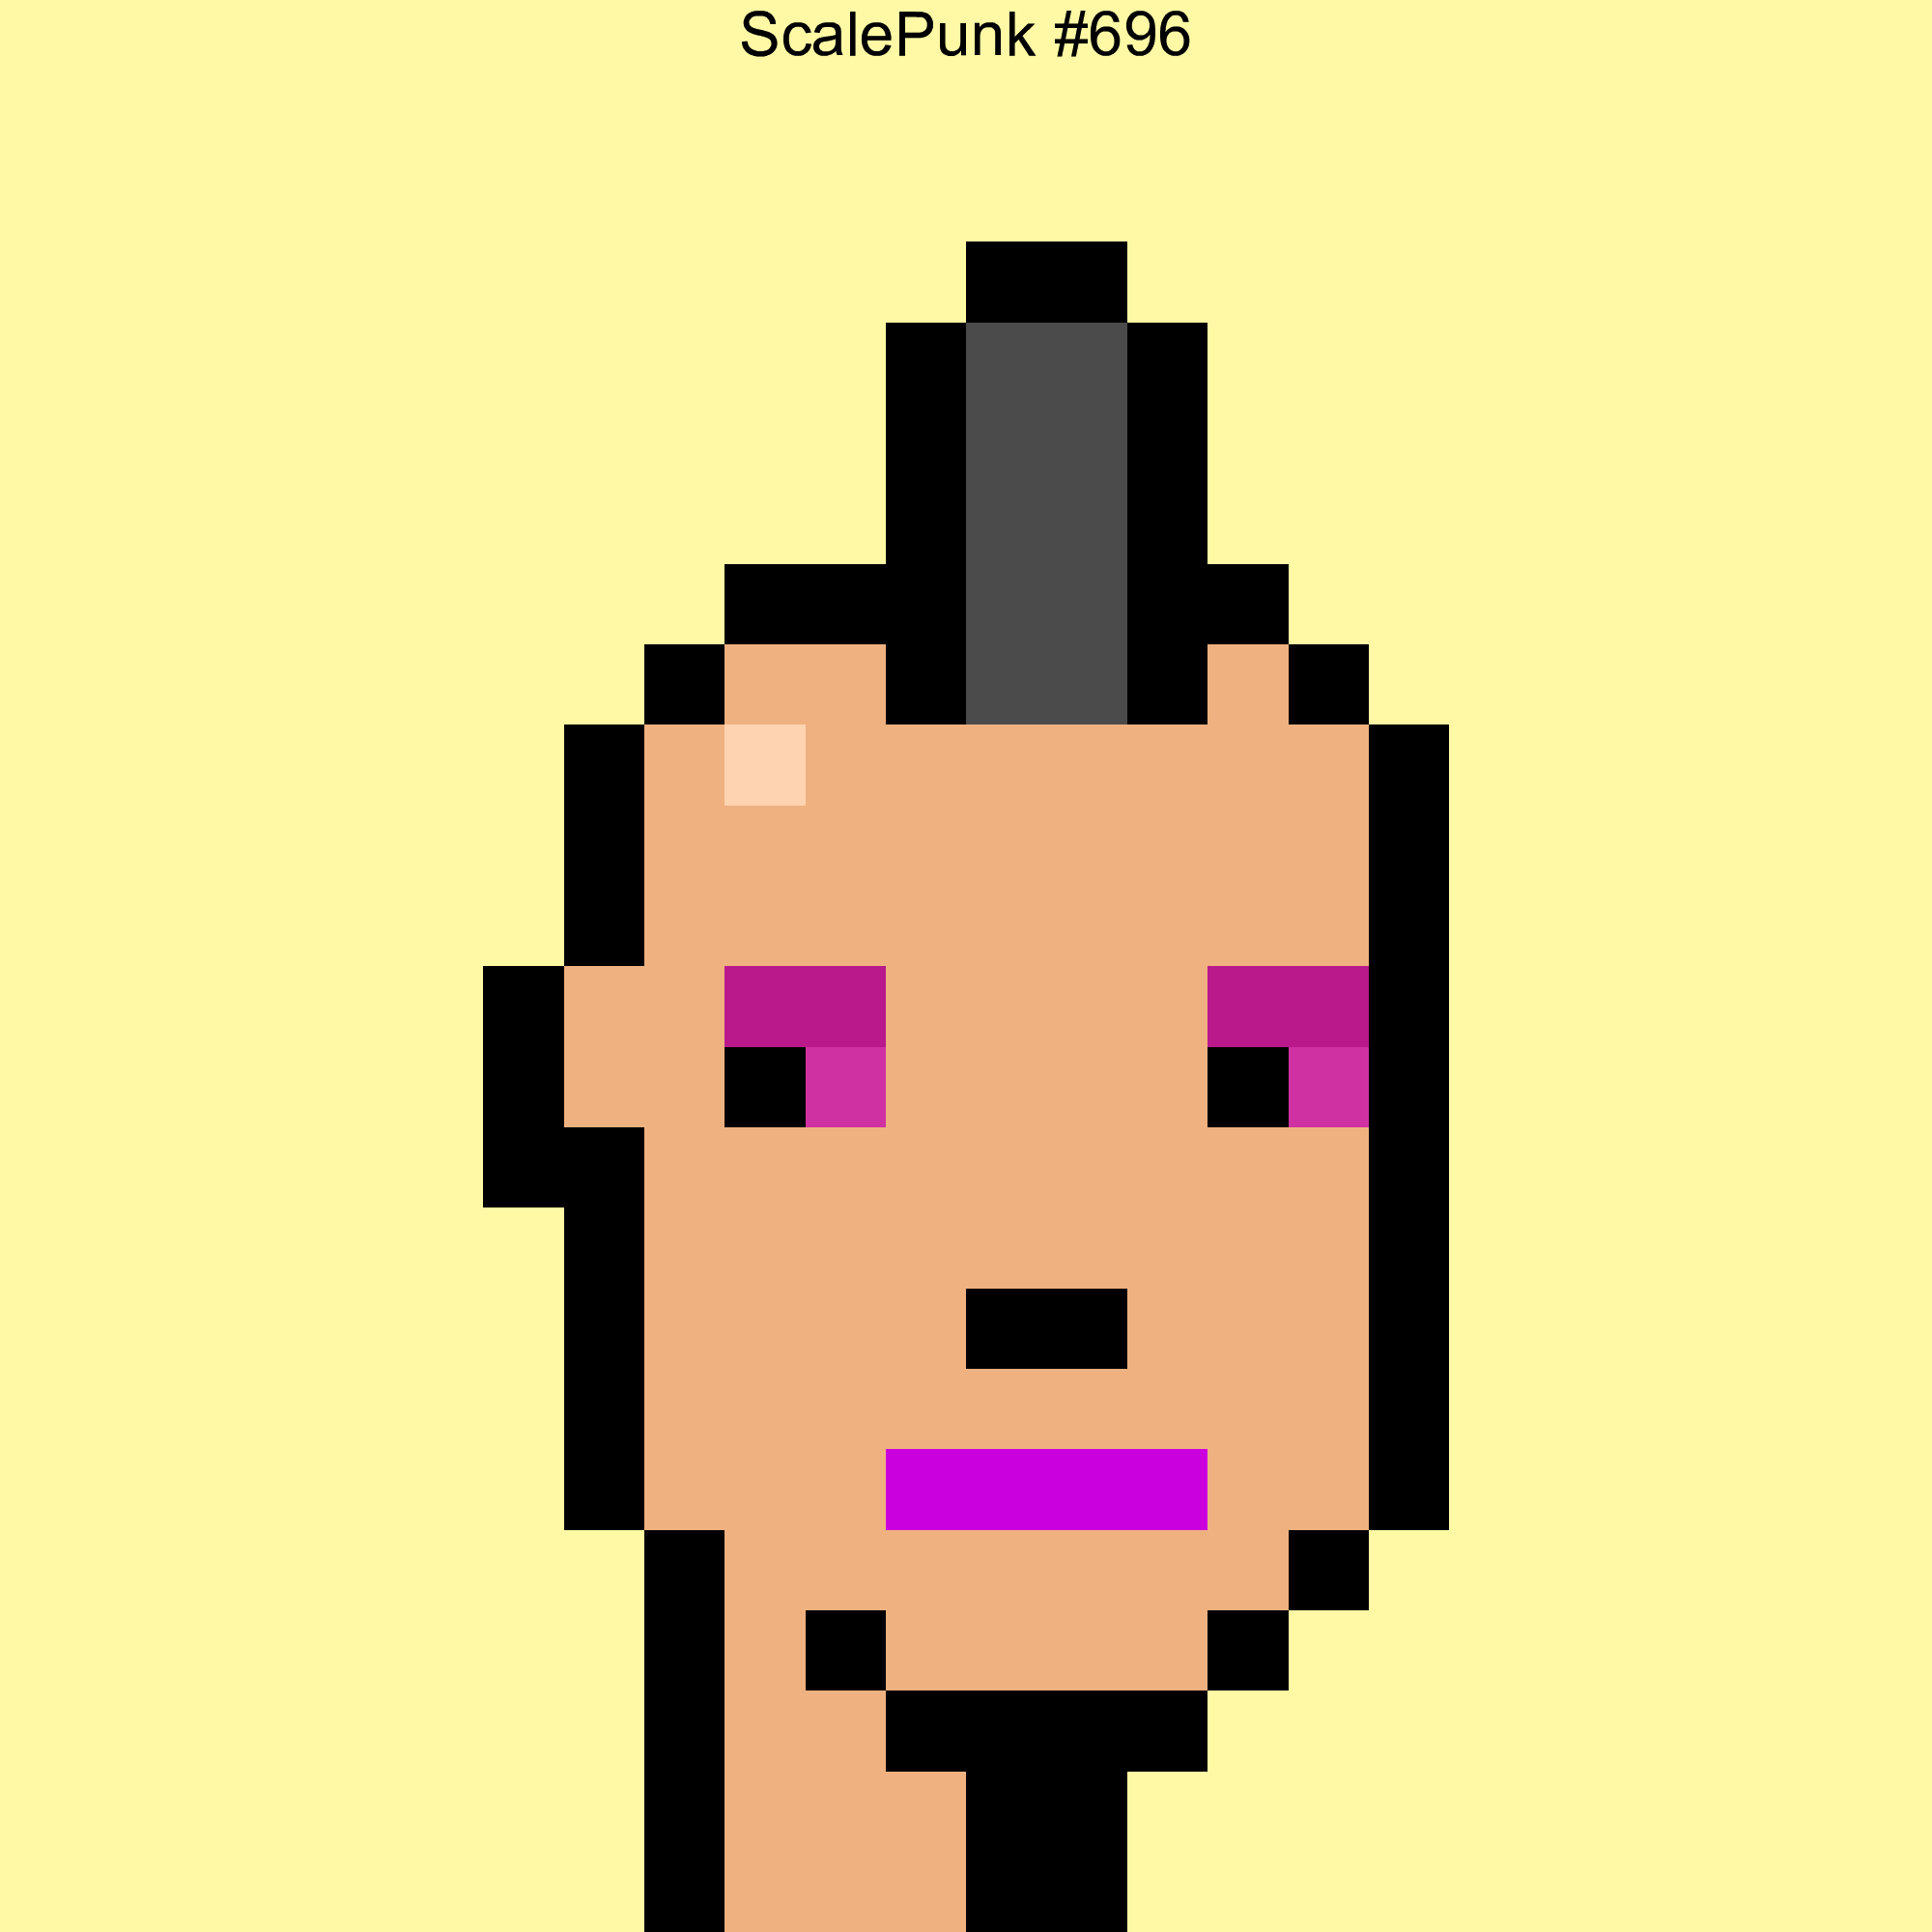 Punk 696